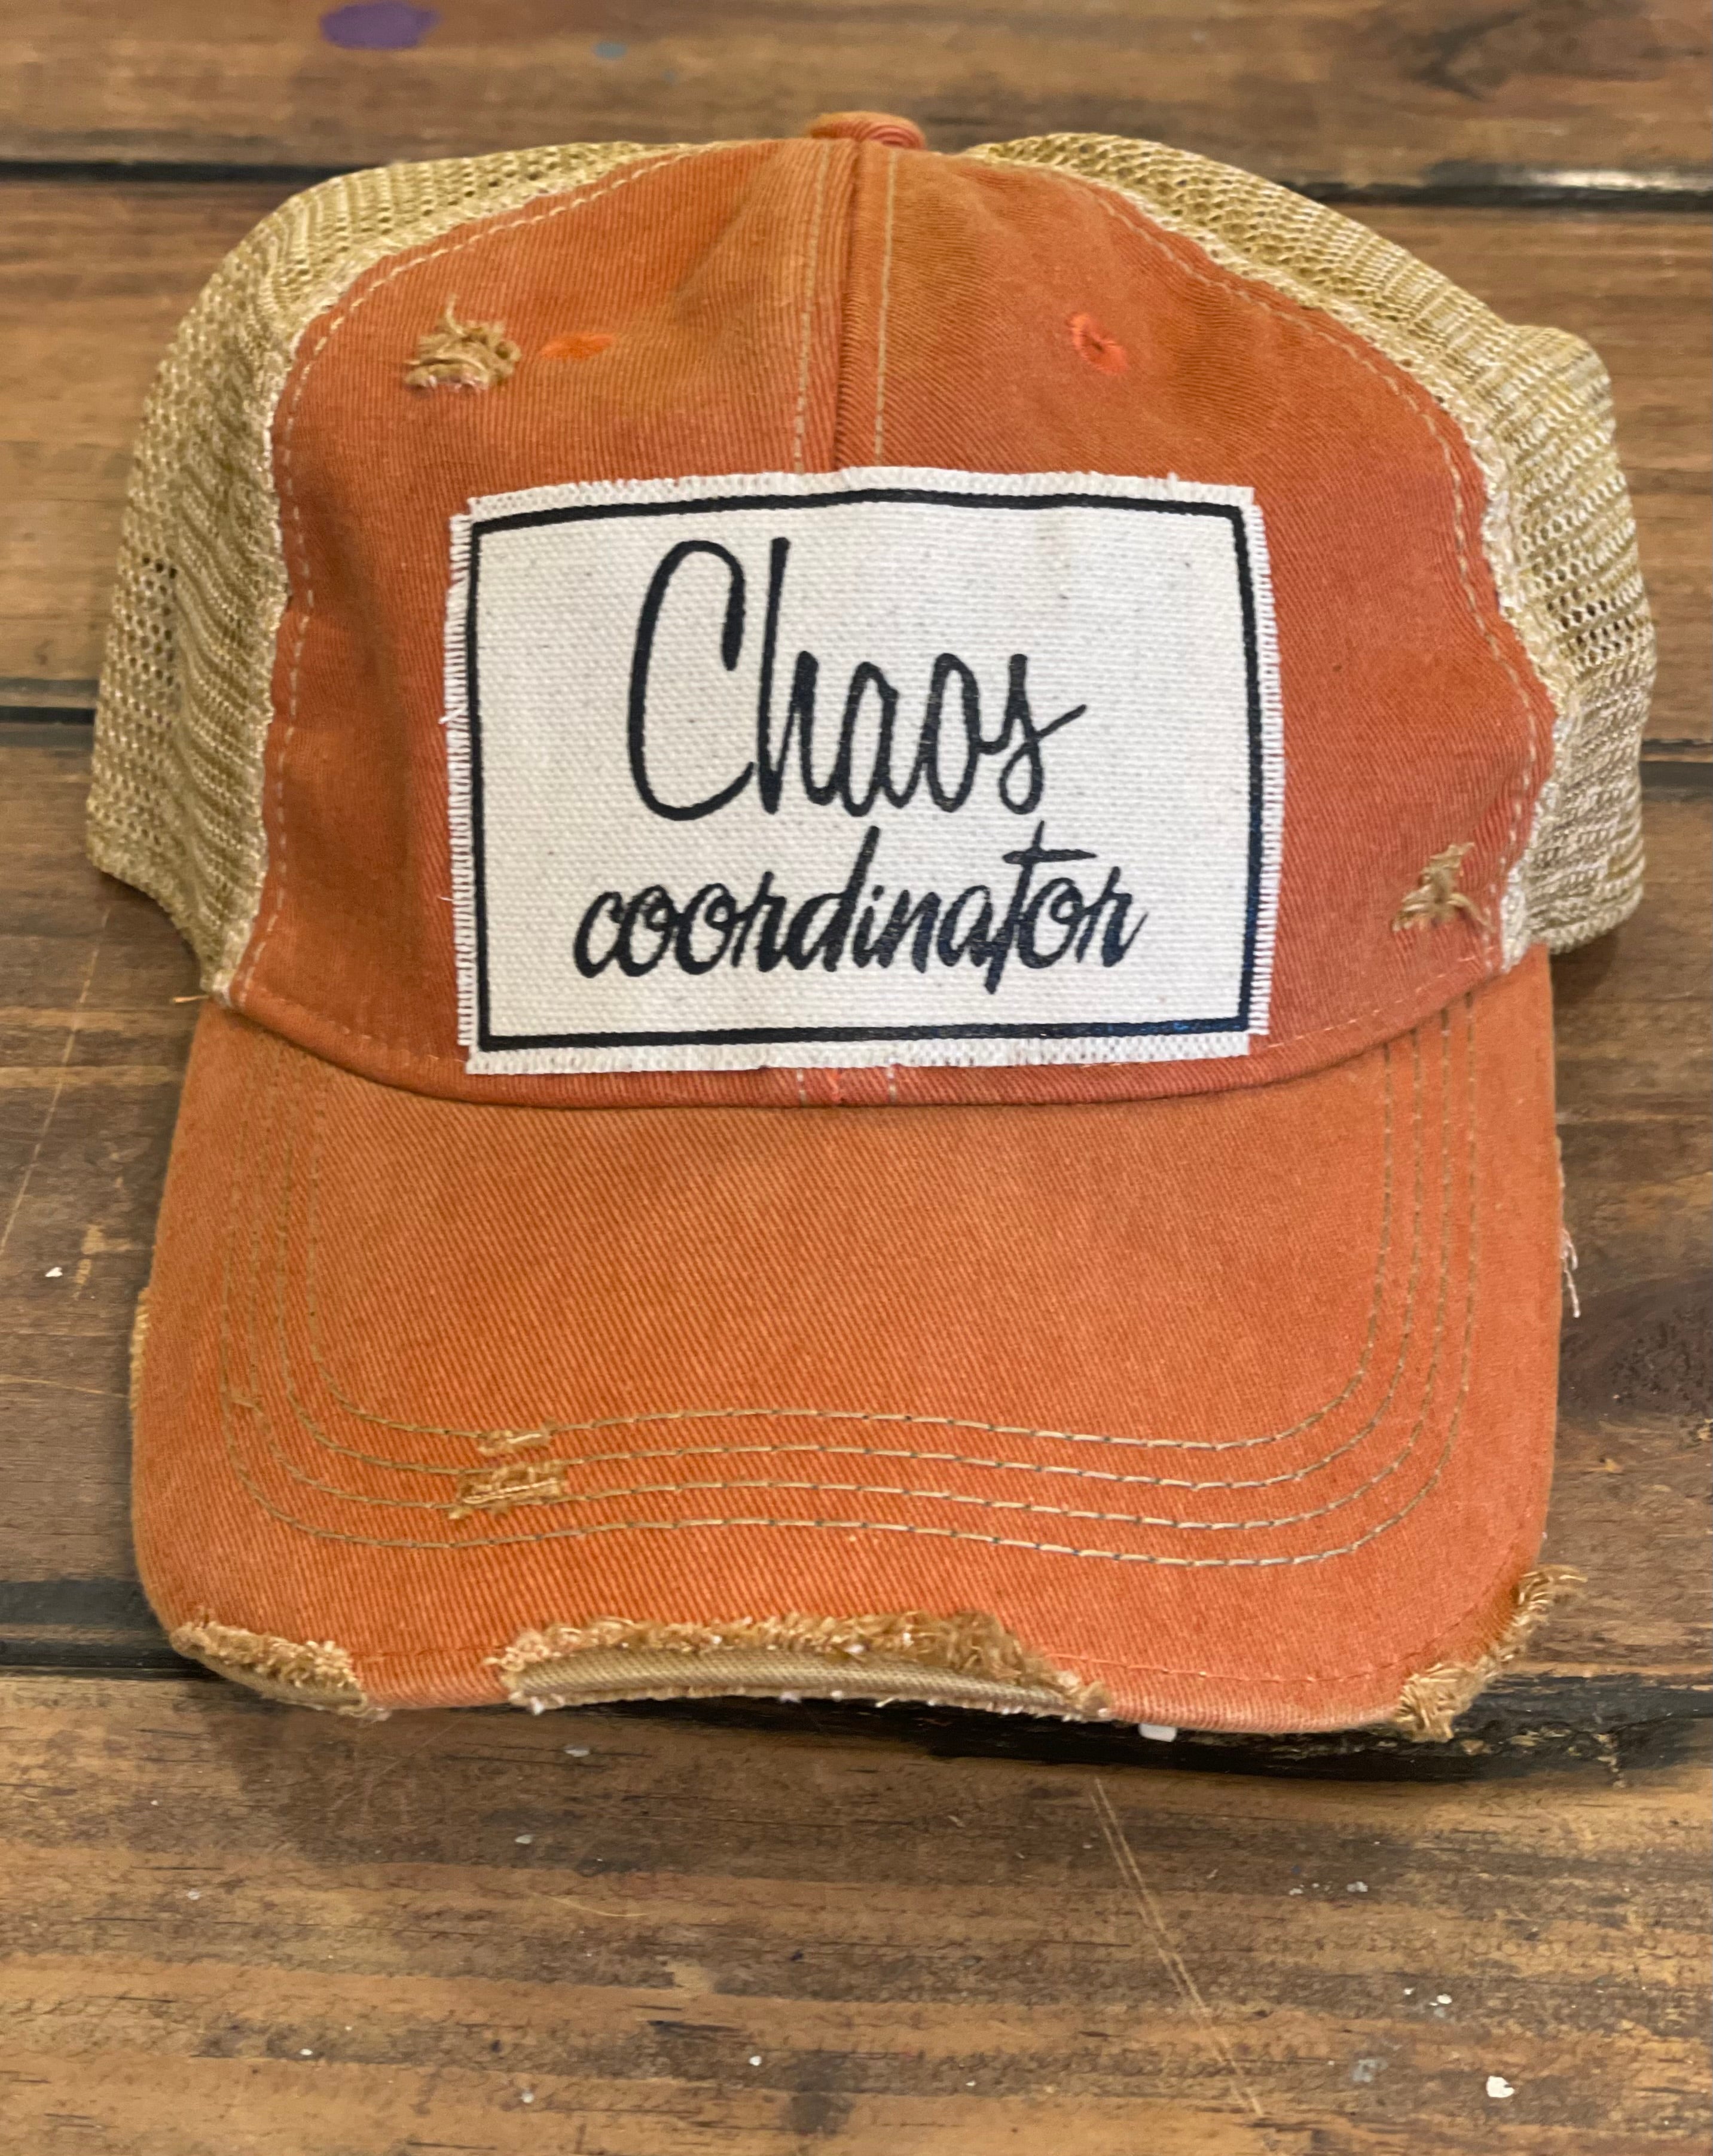 Baseball Cap-Chaos Coordinator